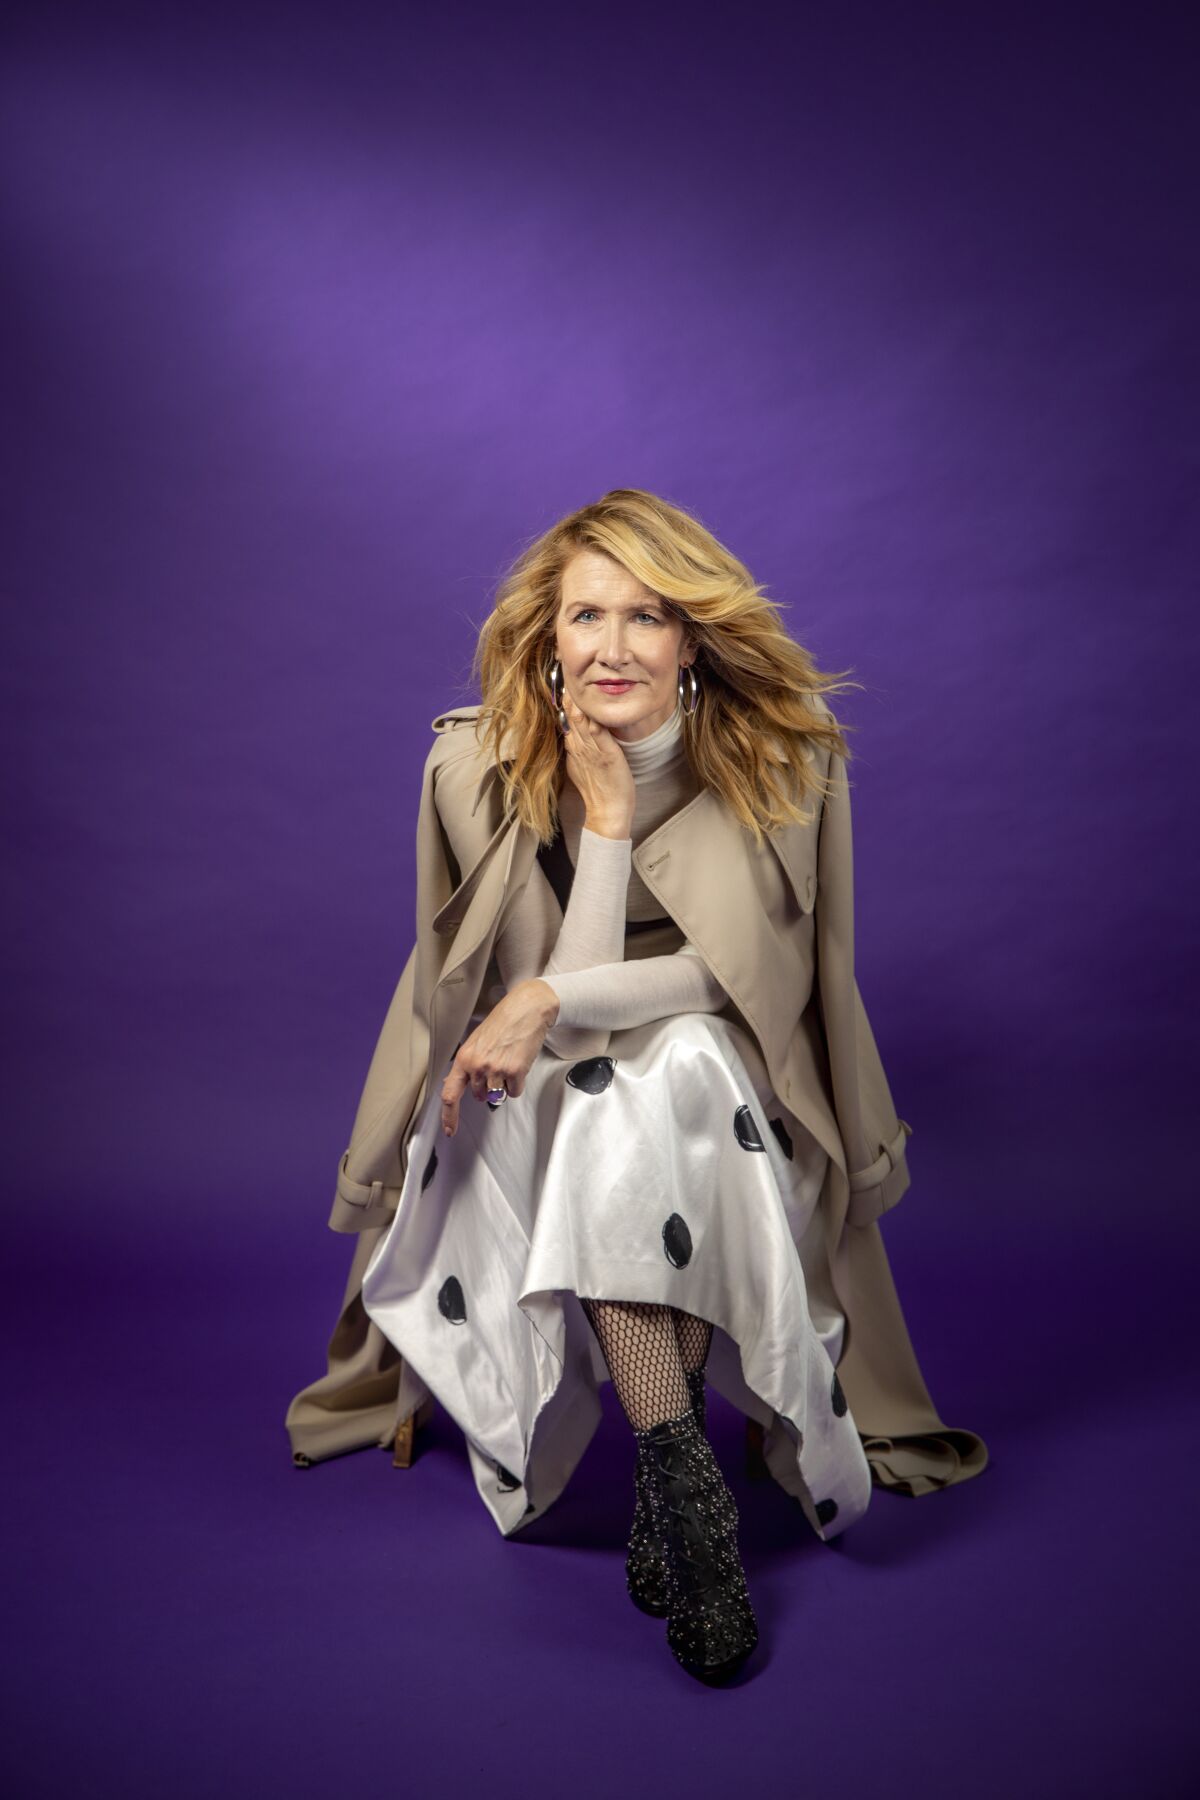 Laura Dern against a royal purple backdrop